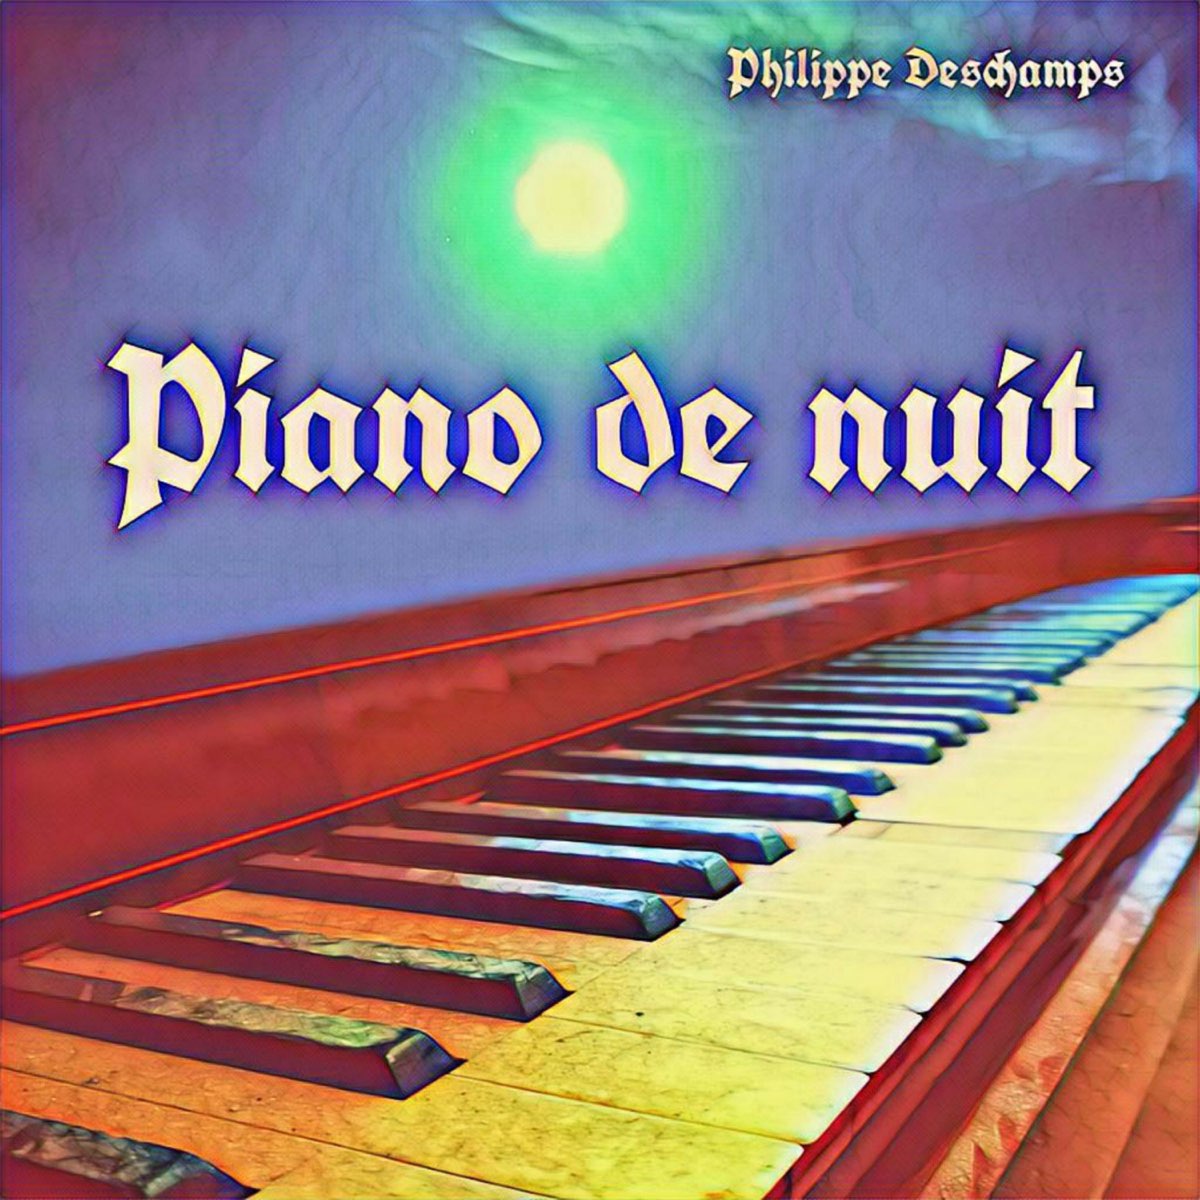 Piano de nuit - EP by Philippe Deschamps on Apple Music